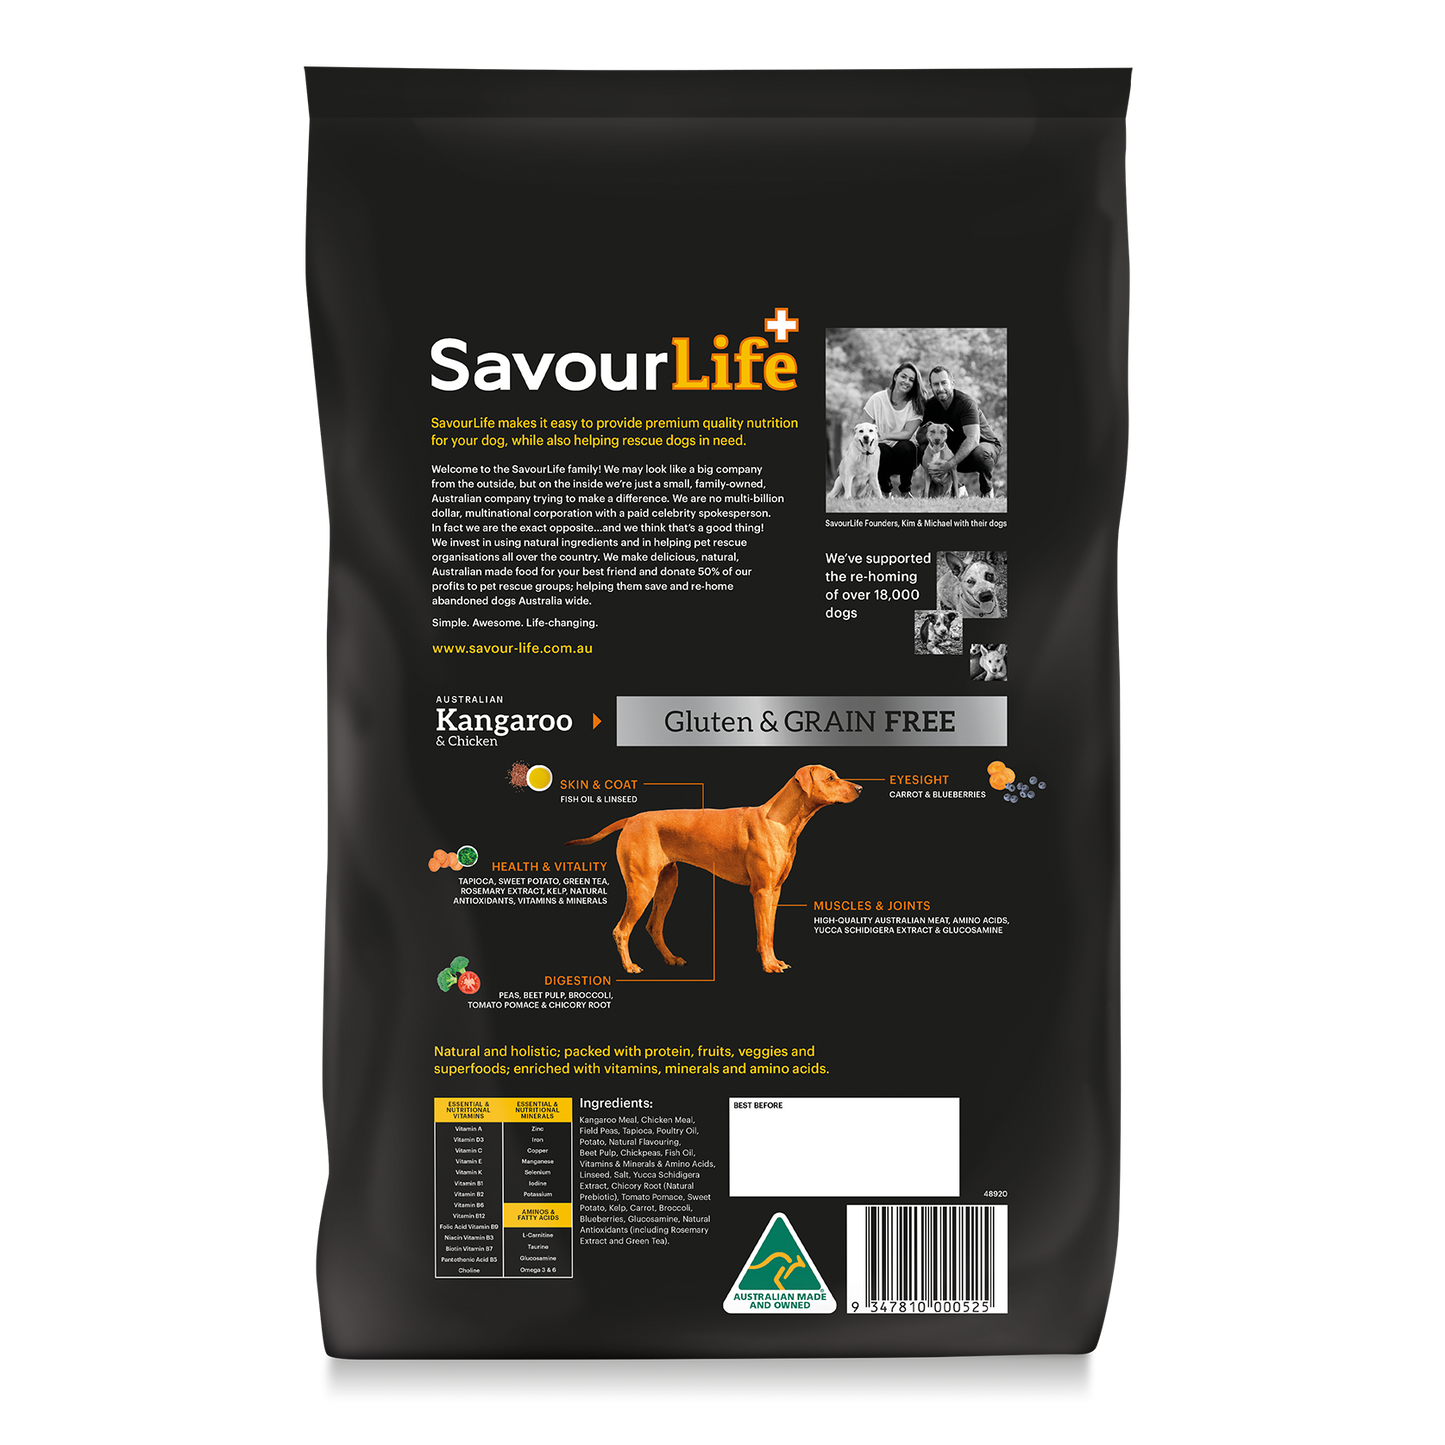 Savourlife Grain Free Australian Kangaroo & Chicken Dry Dog Food